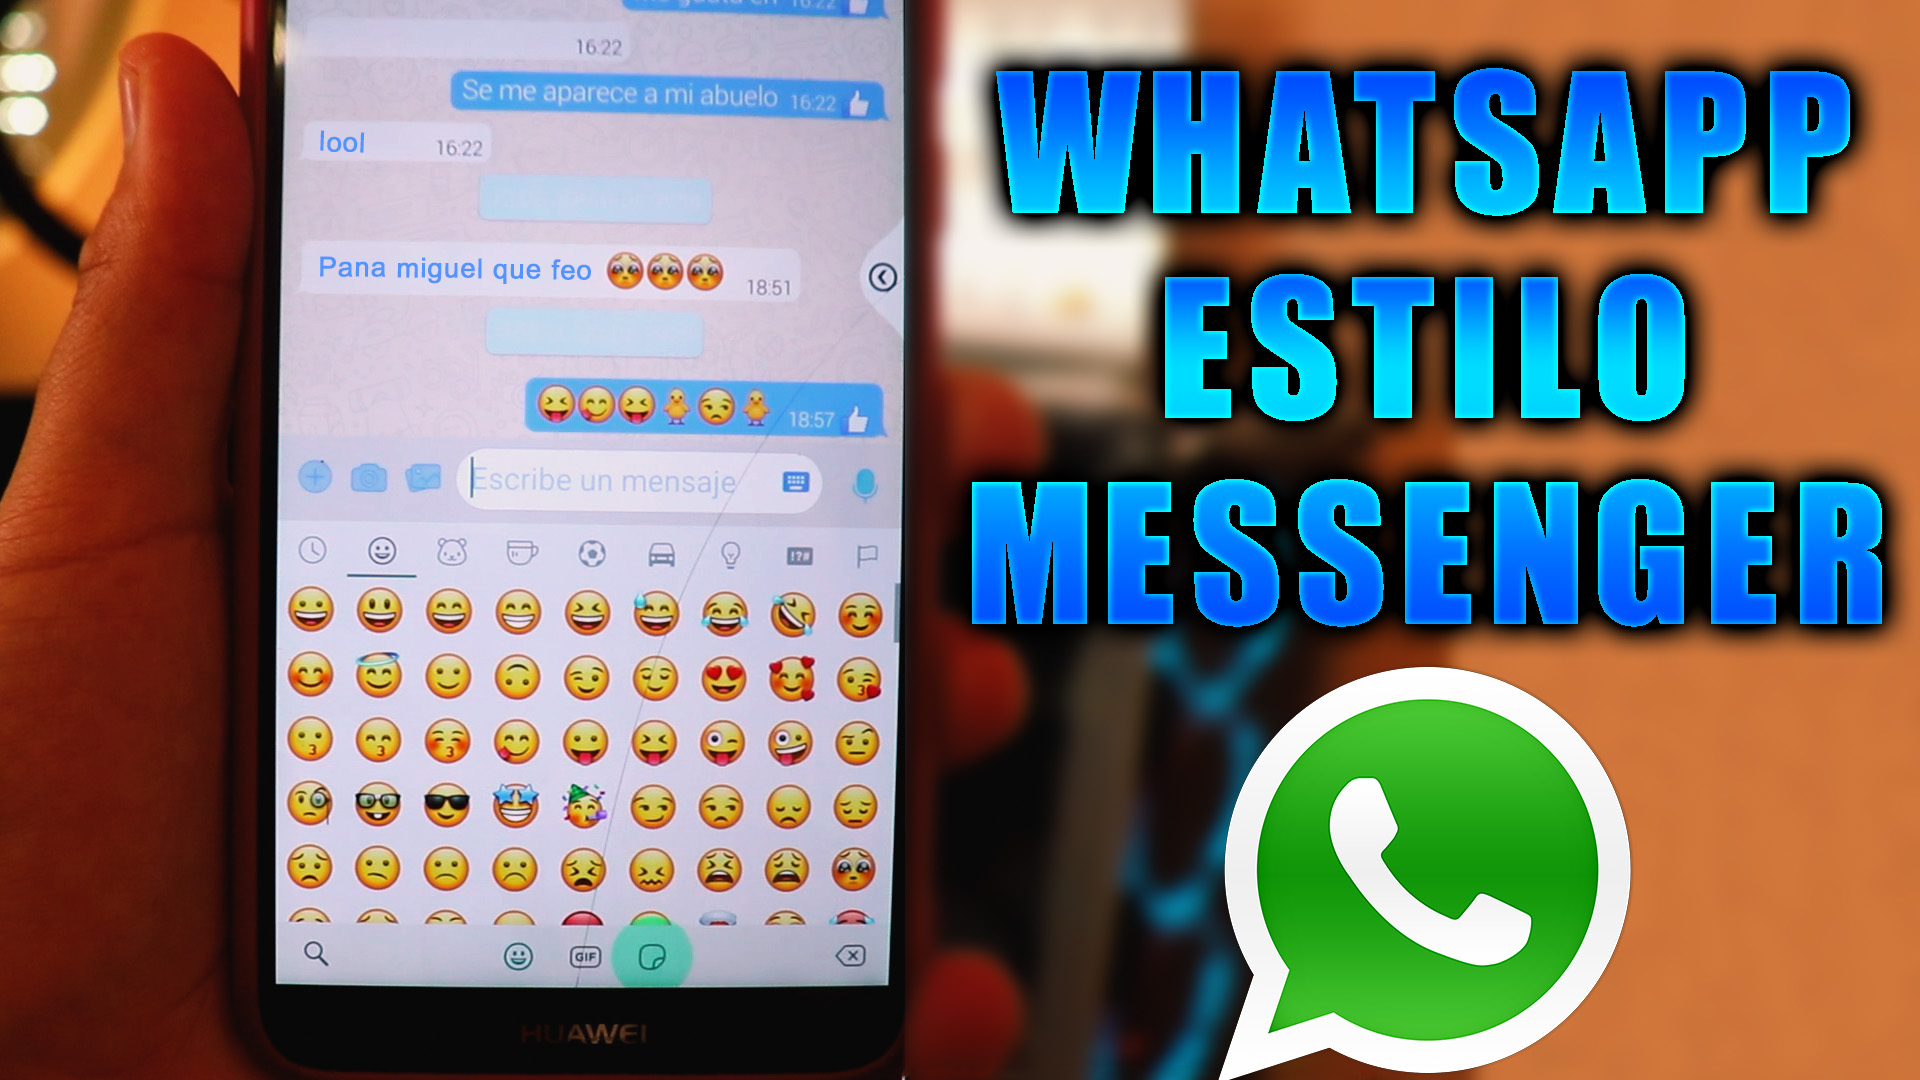 whatsapp estilo messenger